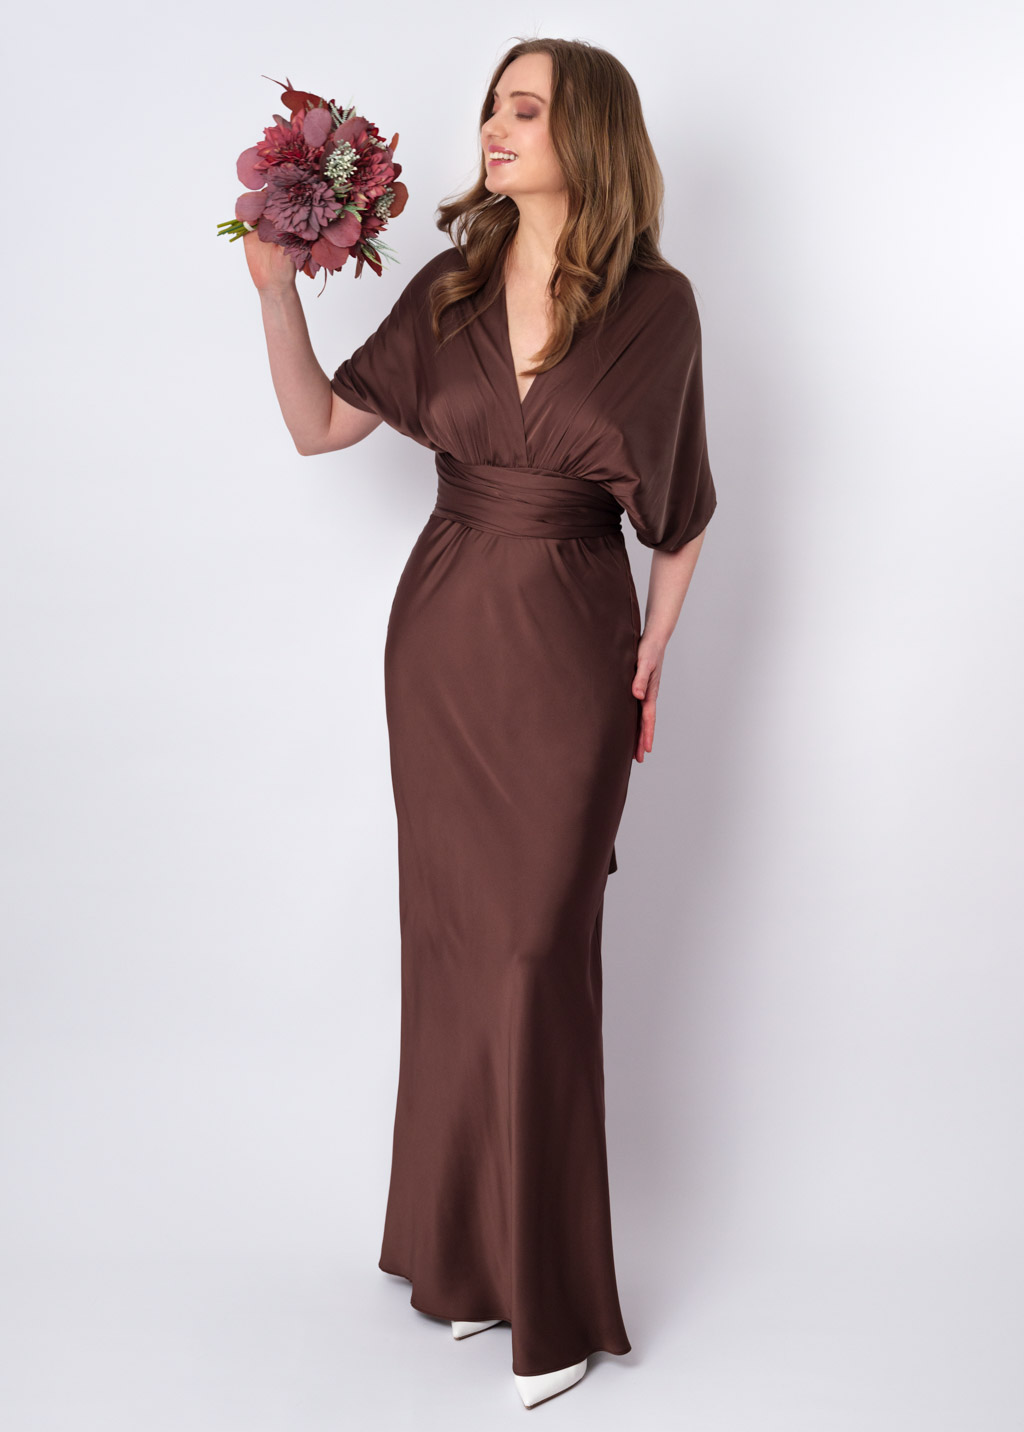 Chocolate brown infinity long dress